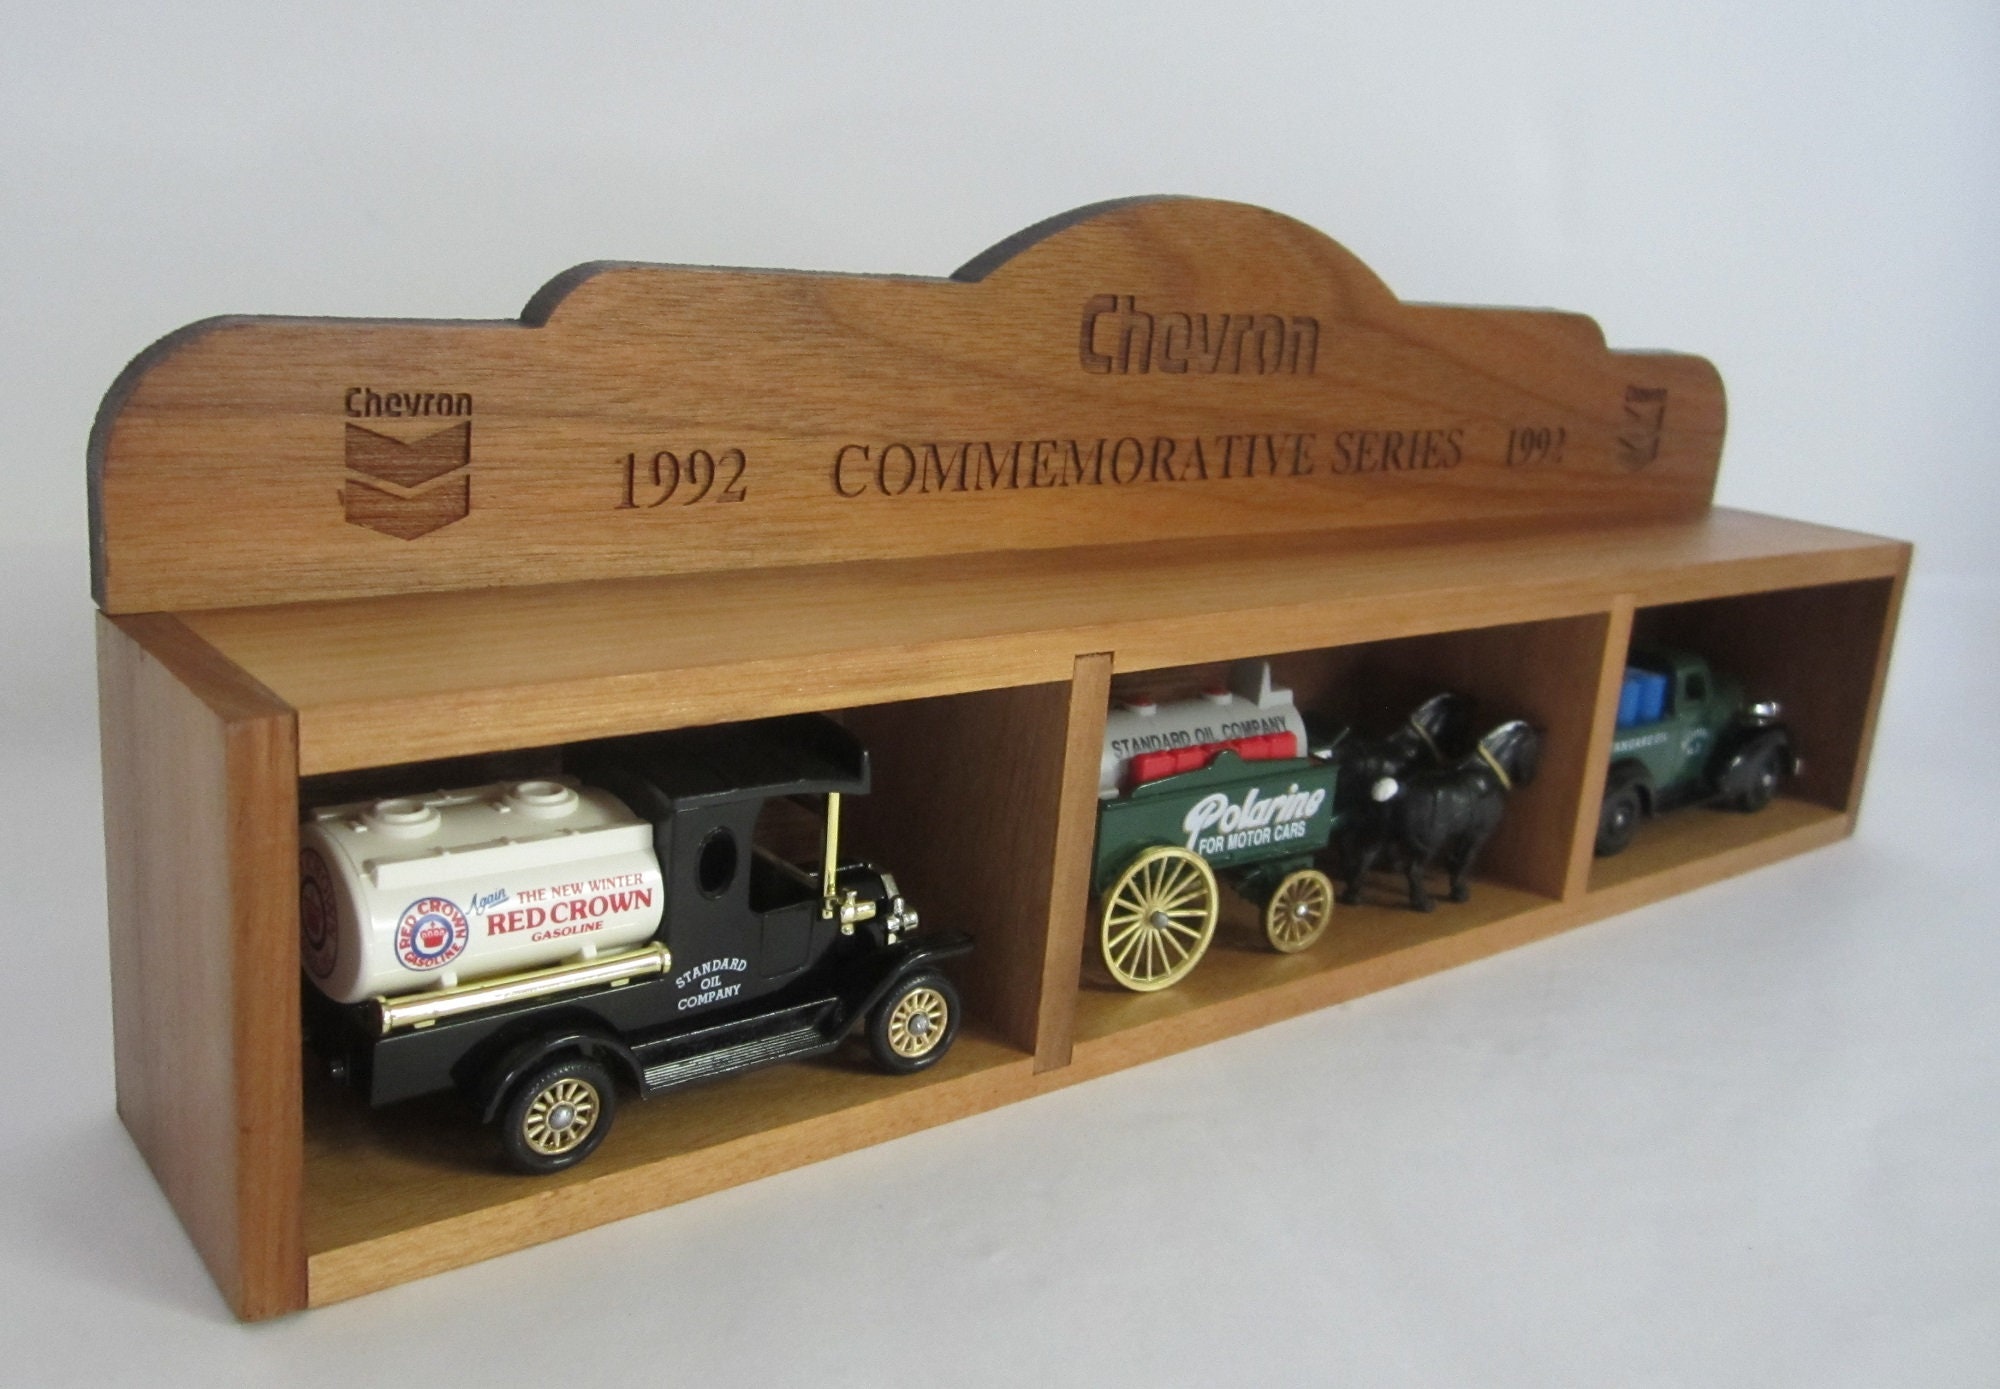 1992 Chevron Commemorative Series Display Shelf & 3 Die-cast Metal Oil  Trucks by Lledo, PLC, England Walnut Wood Box by Laser Art, Canada -   Canada